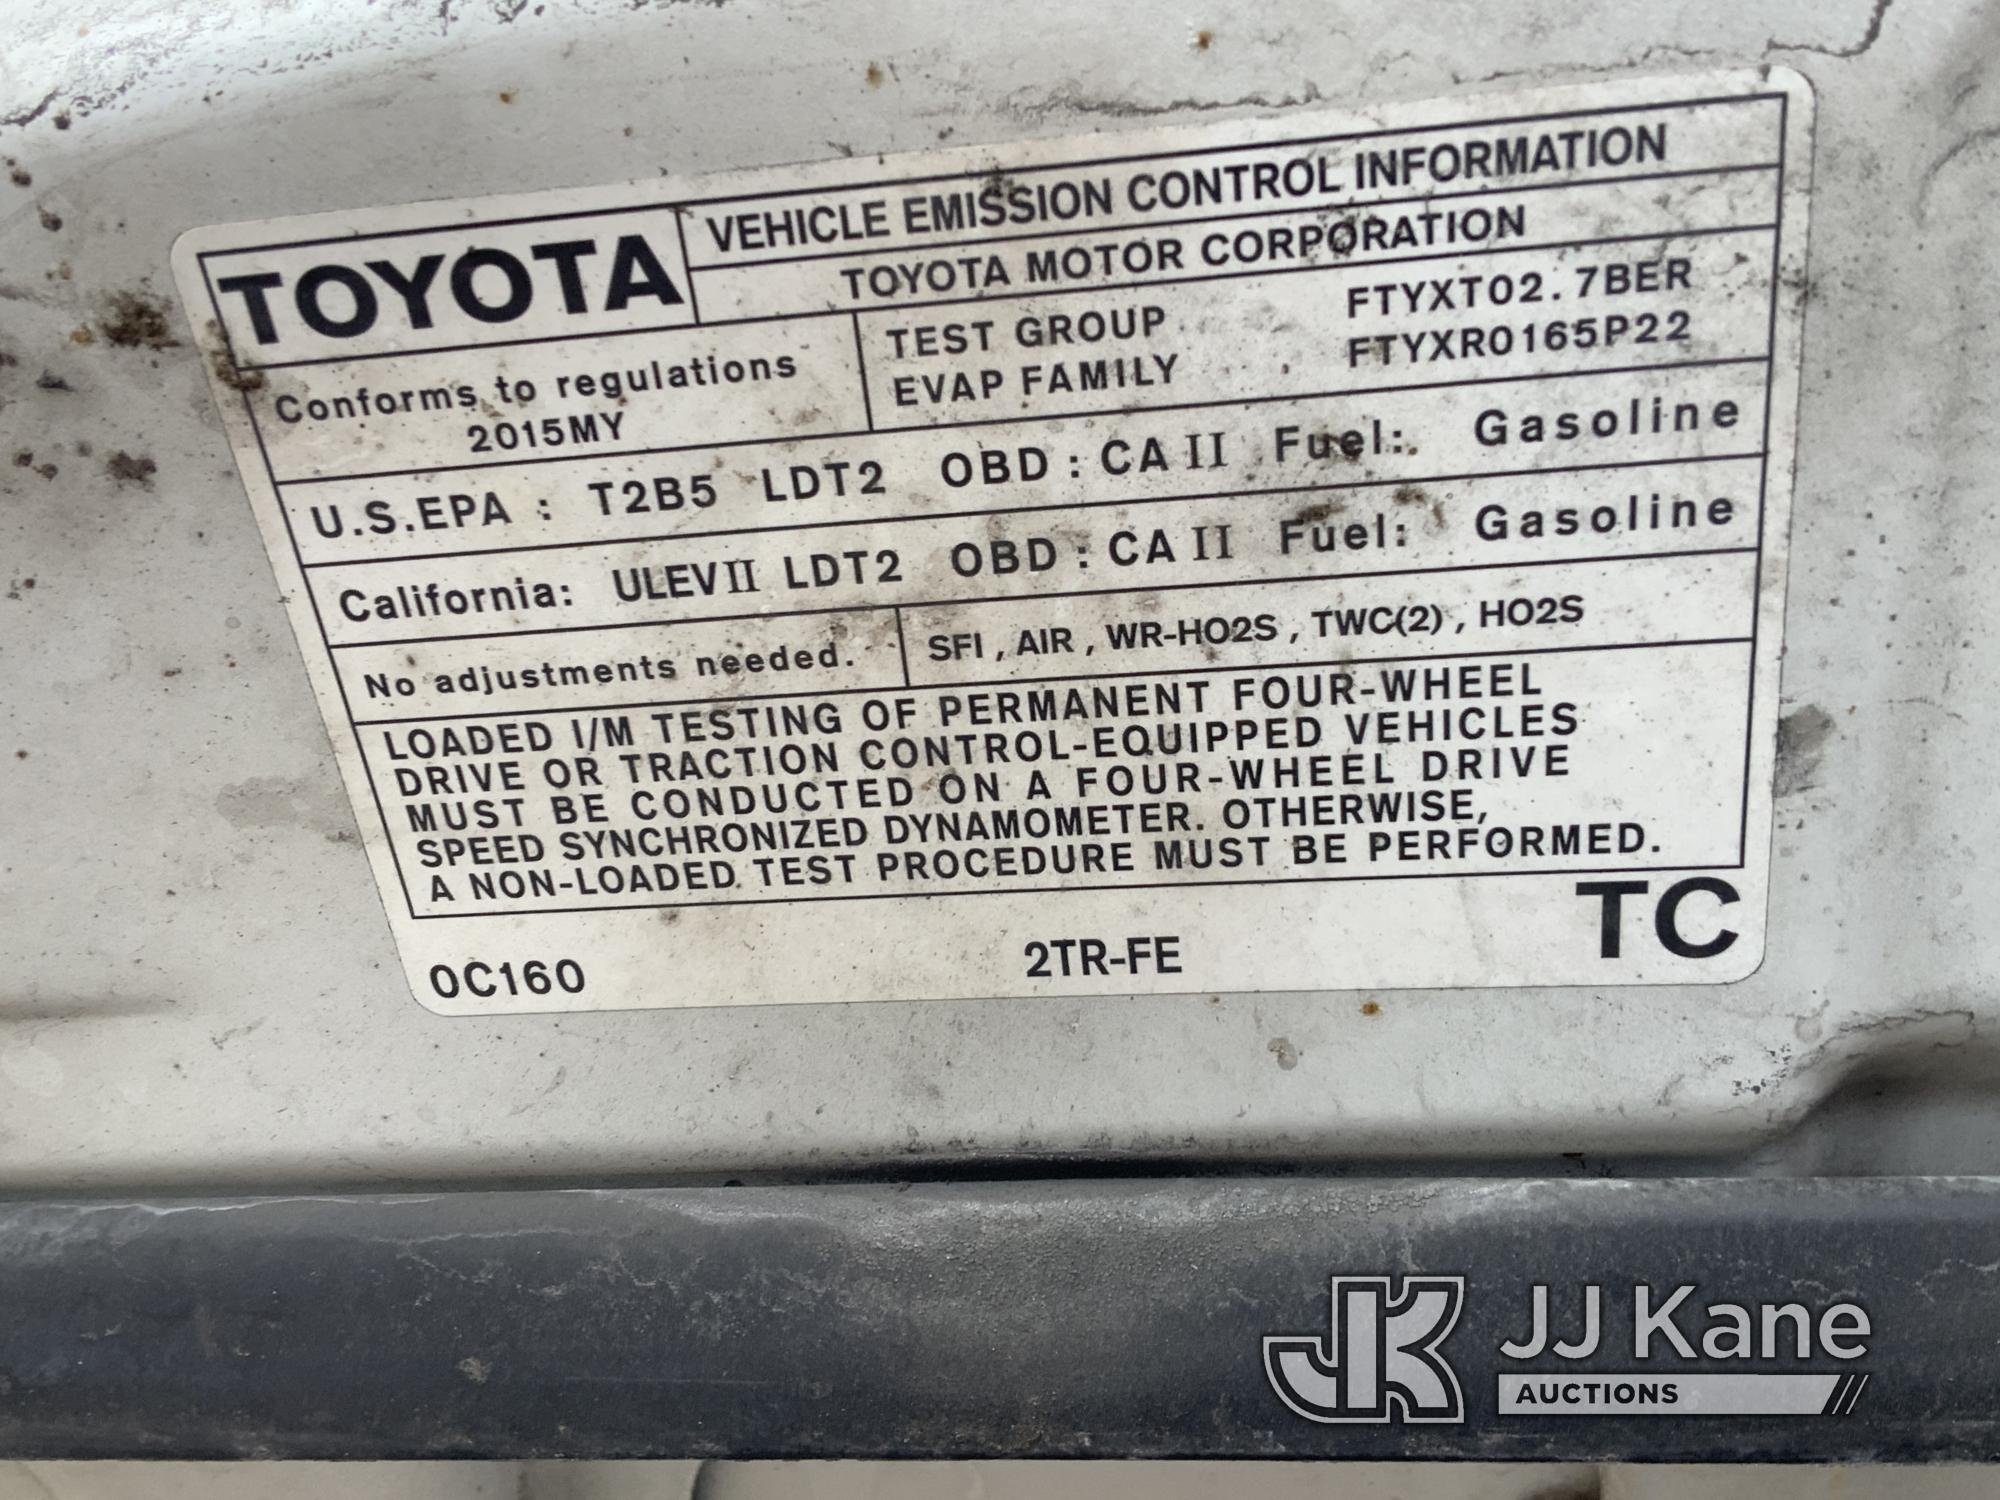 (Dixon, CA) 2015 Toyota Tacoma 4x4 Extended-Cab Pickup Truck, Drivers side visor broken. Small dent